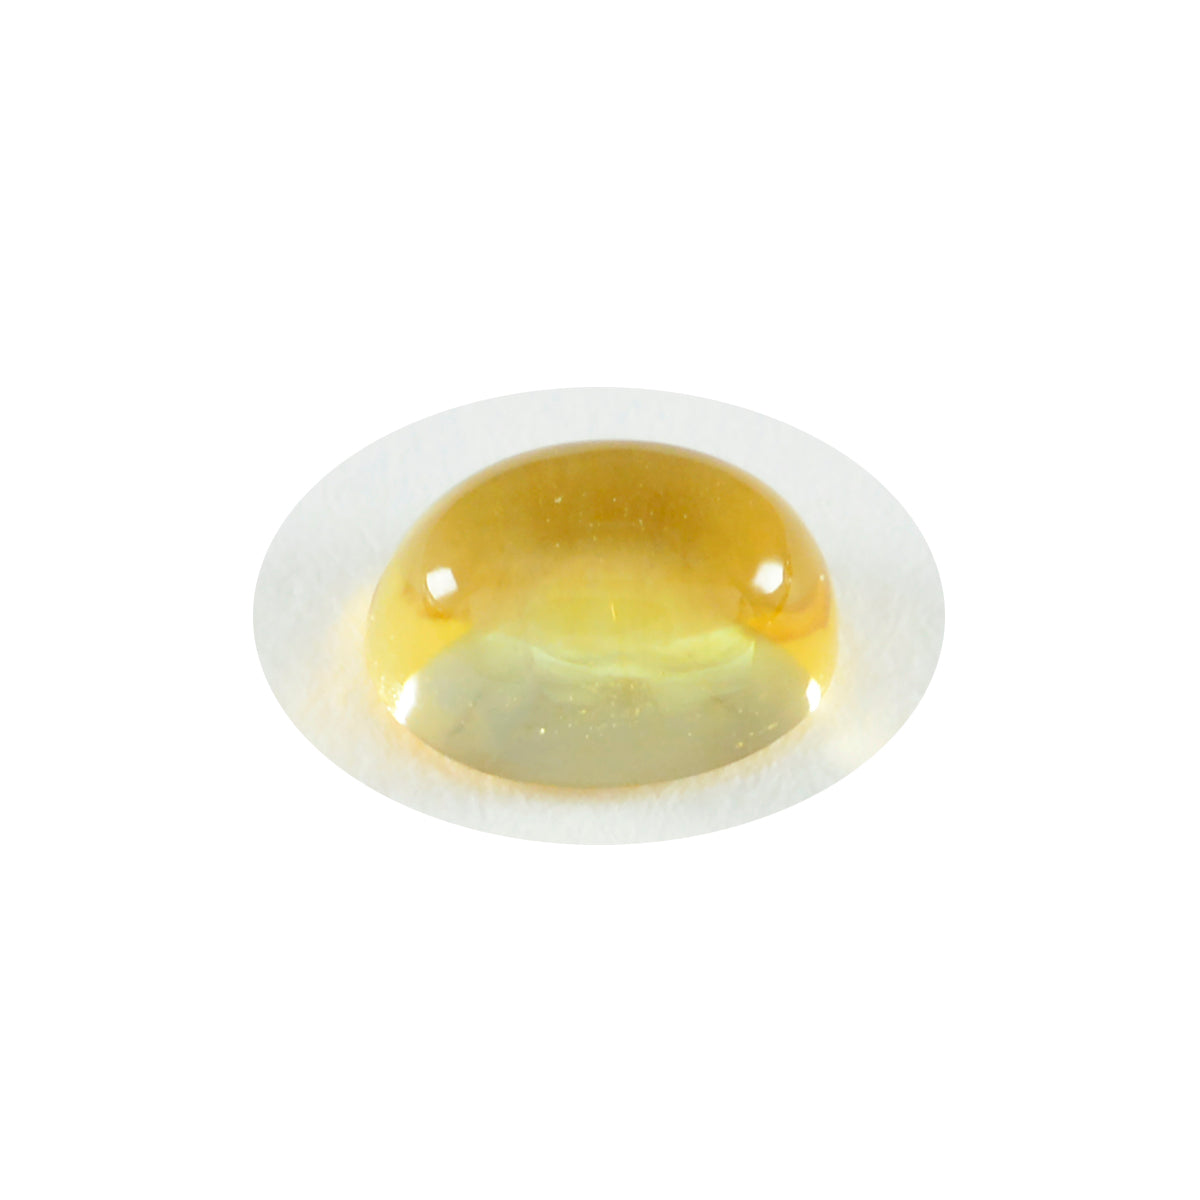 Riyogems 1PC Yellow Citrine Cabochon 12x16 mm Oval Shape lovely Quality Loose Stone